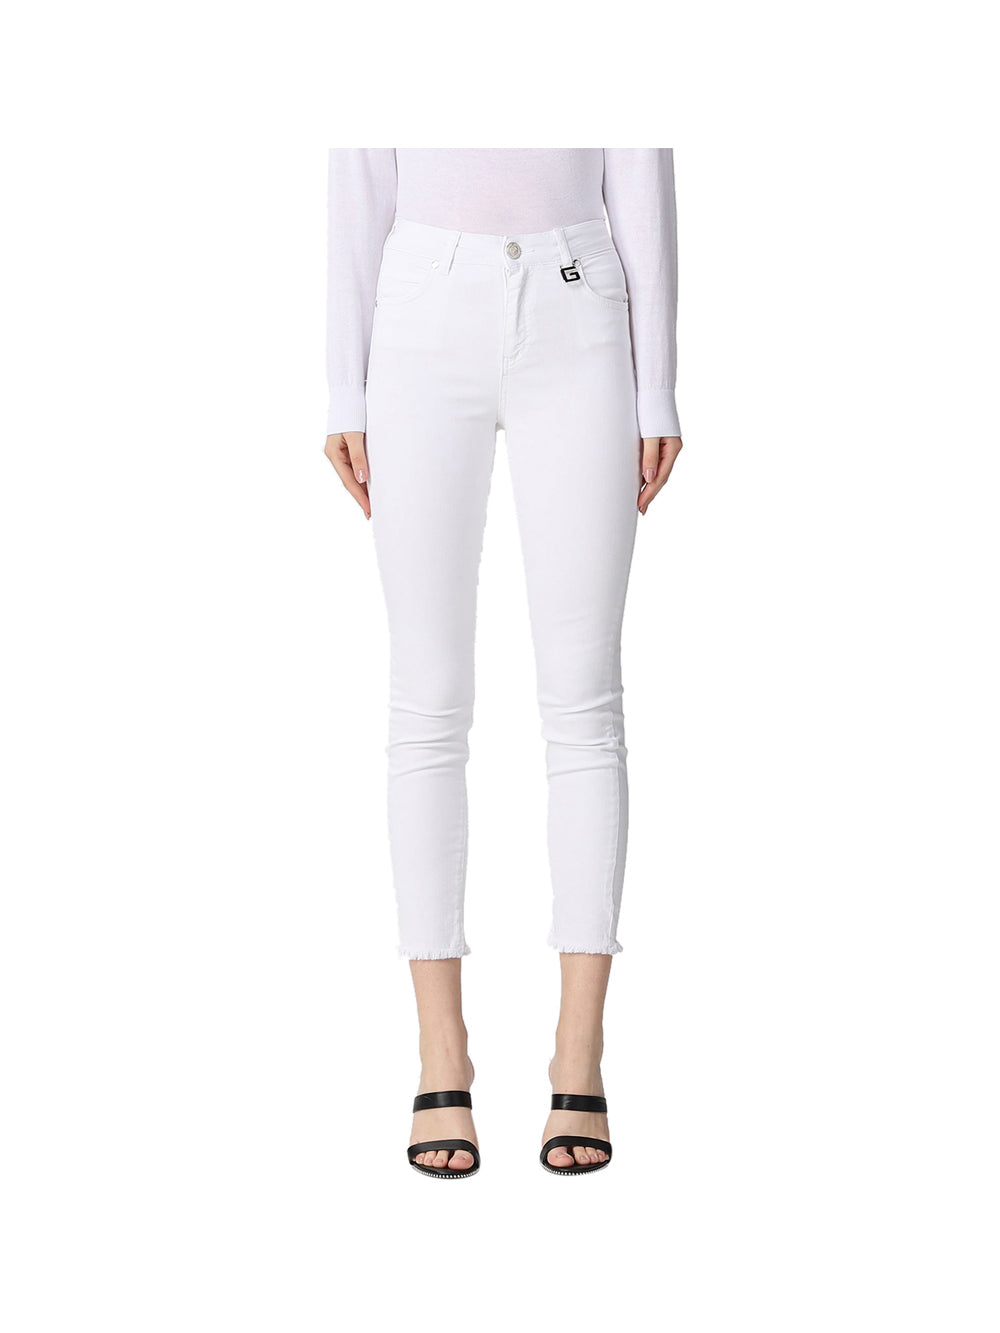 GAELLE PARIS Jeans Donna Bianco in cotone Bianco